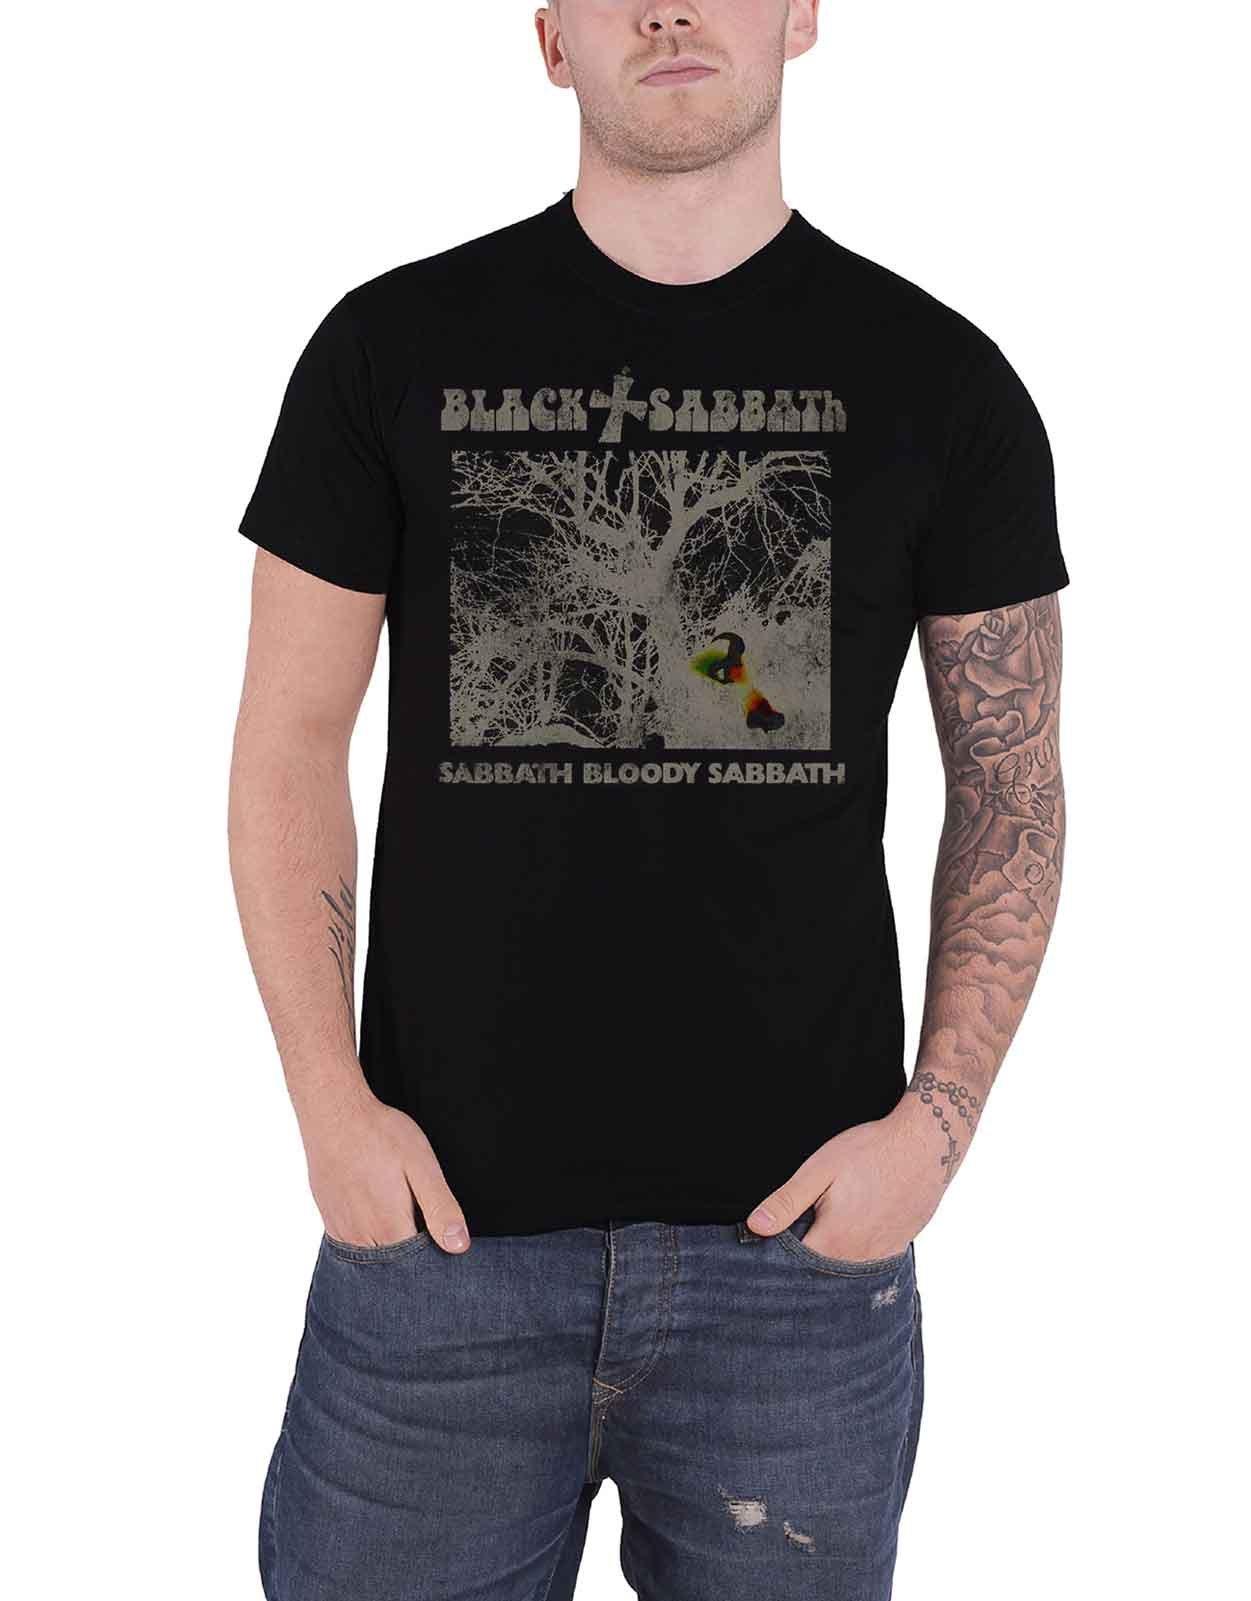 black sabbath sabbath bloody sabbath Винтажная футболка Sabbath Bloody Sabbath Black Sabbath, черный